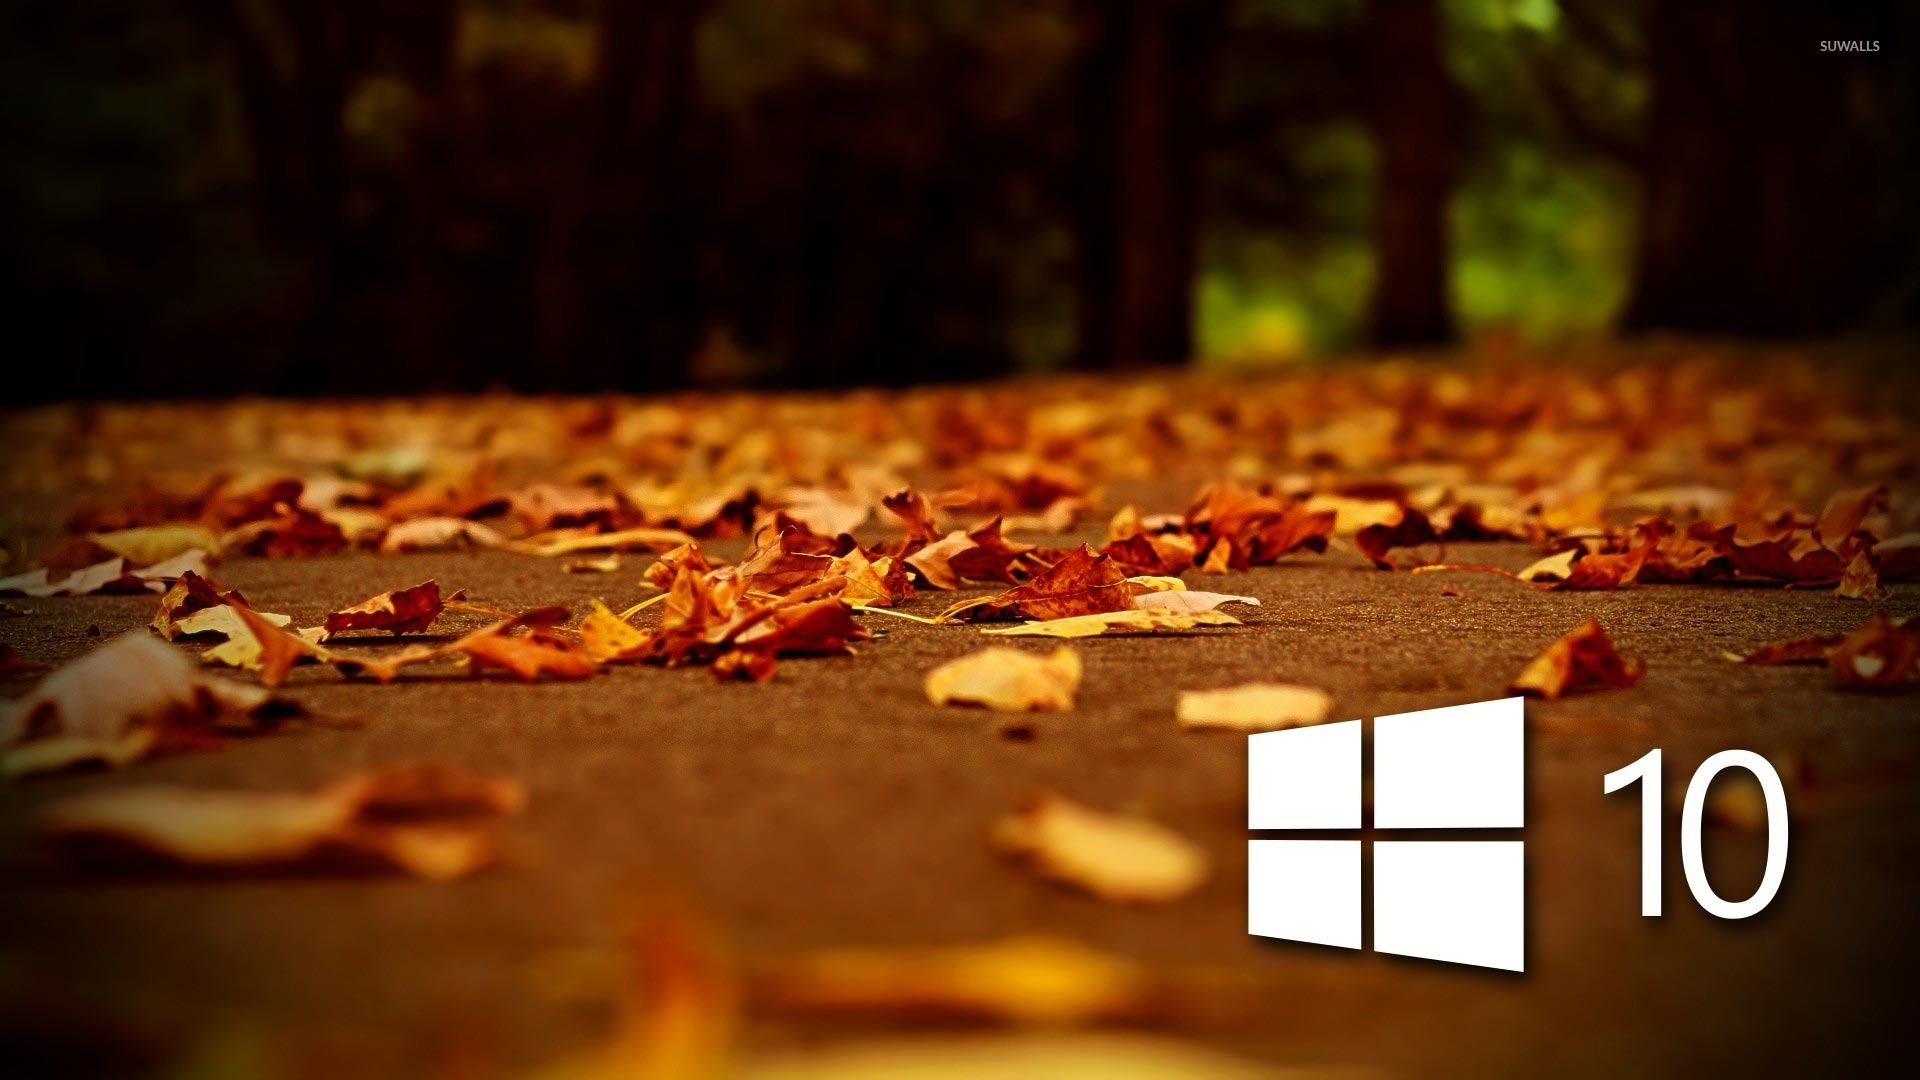 Windows 10 on autumn leaves [4] wallpaper wallpaper